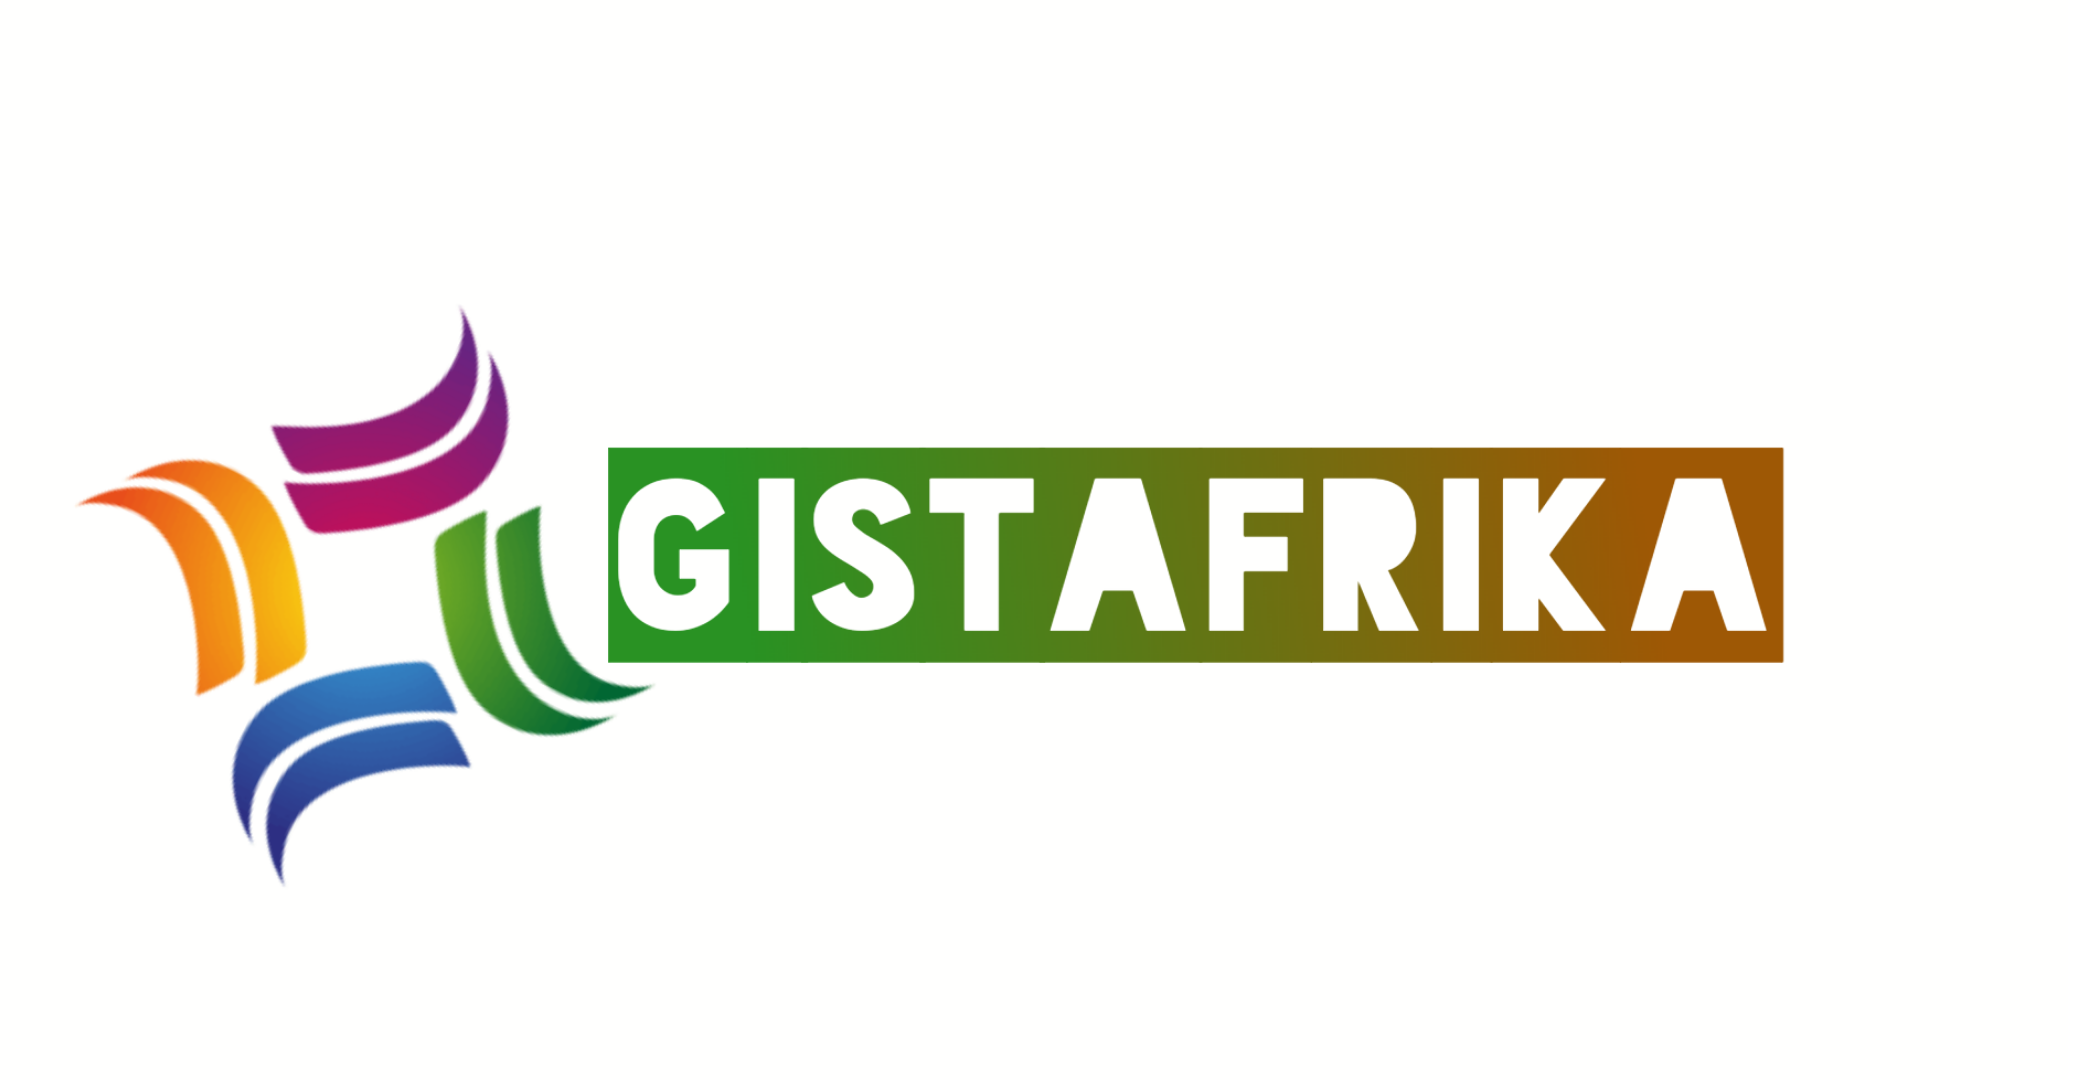 About gistafrika